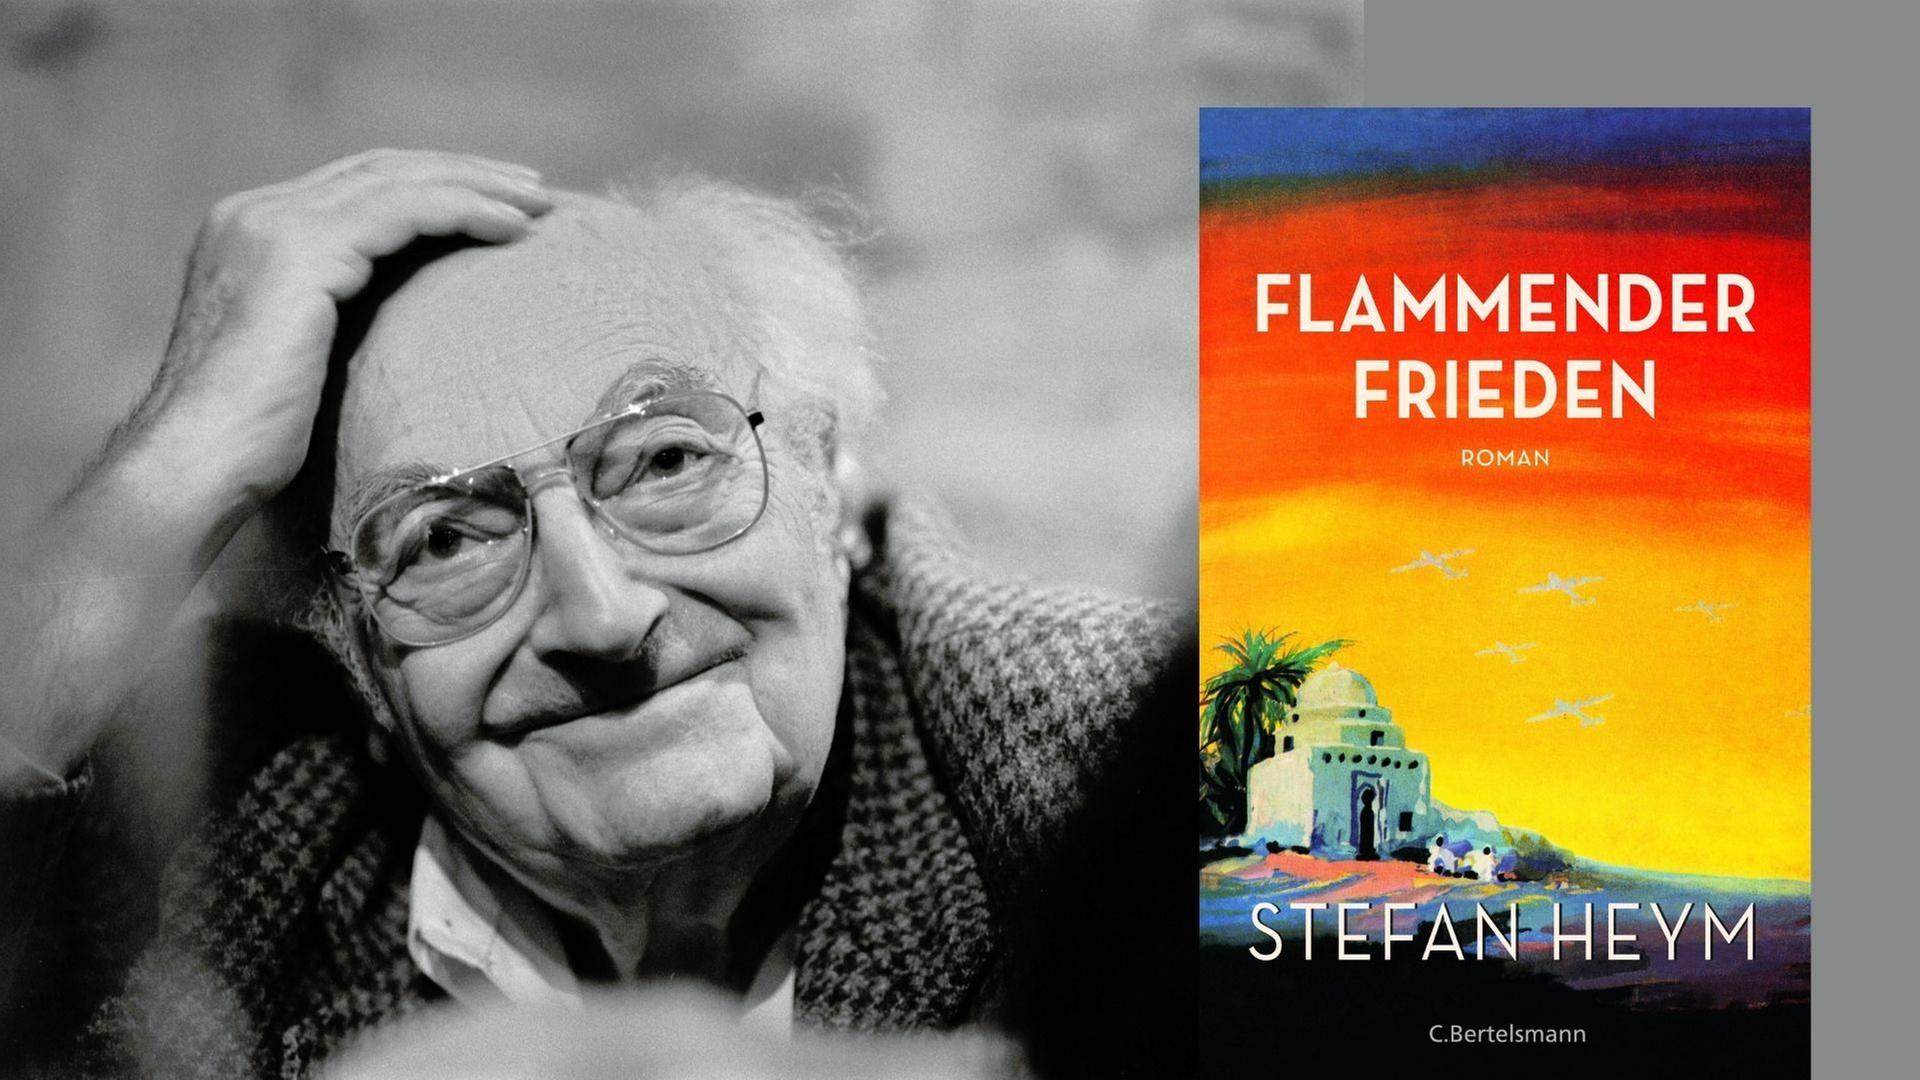 Stefan Heym: "Flammender Frieden"